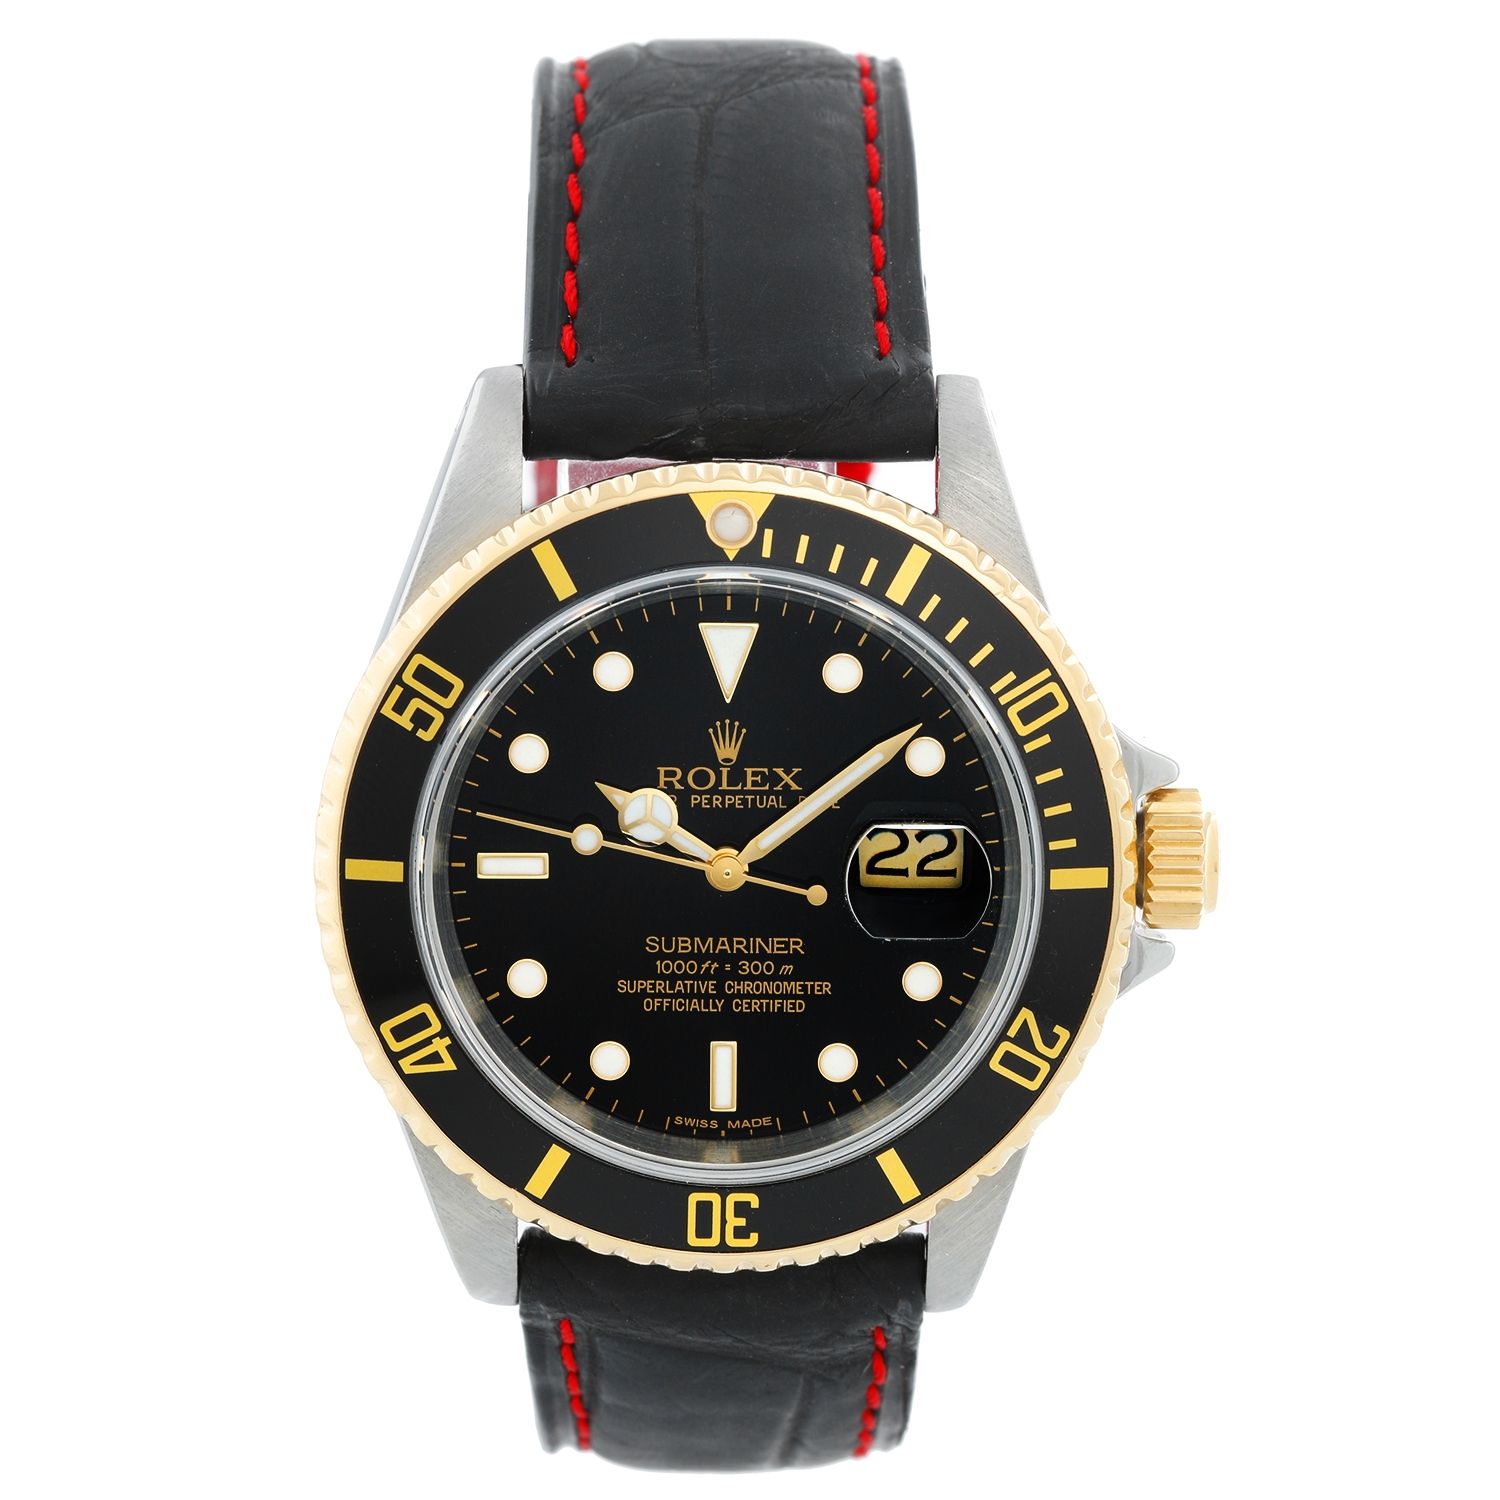 Rolex Submariner Men's 2-Tone Watch on Strap with Stitching